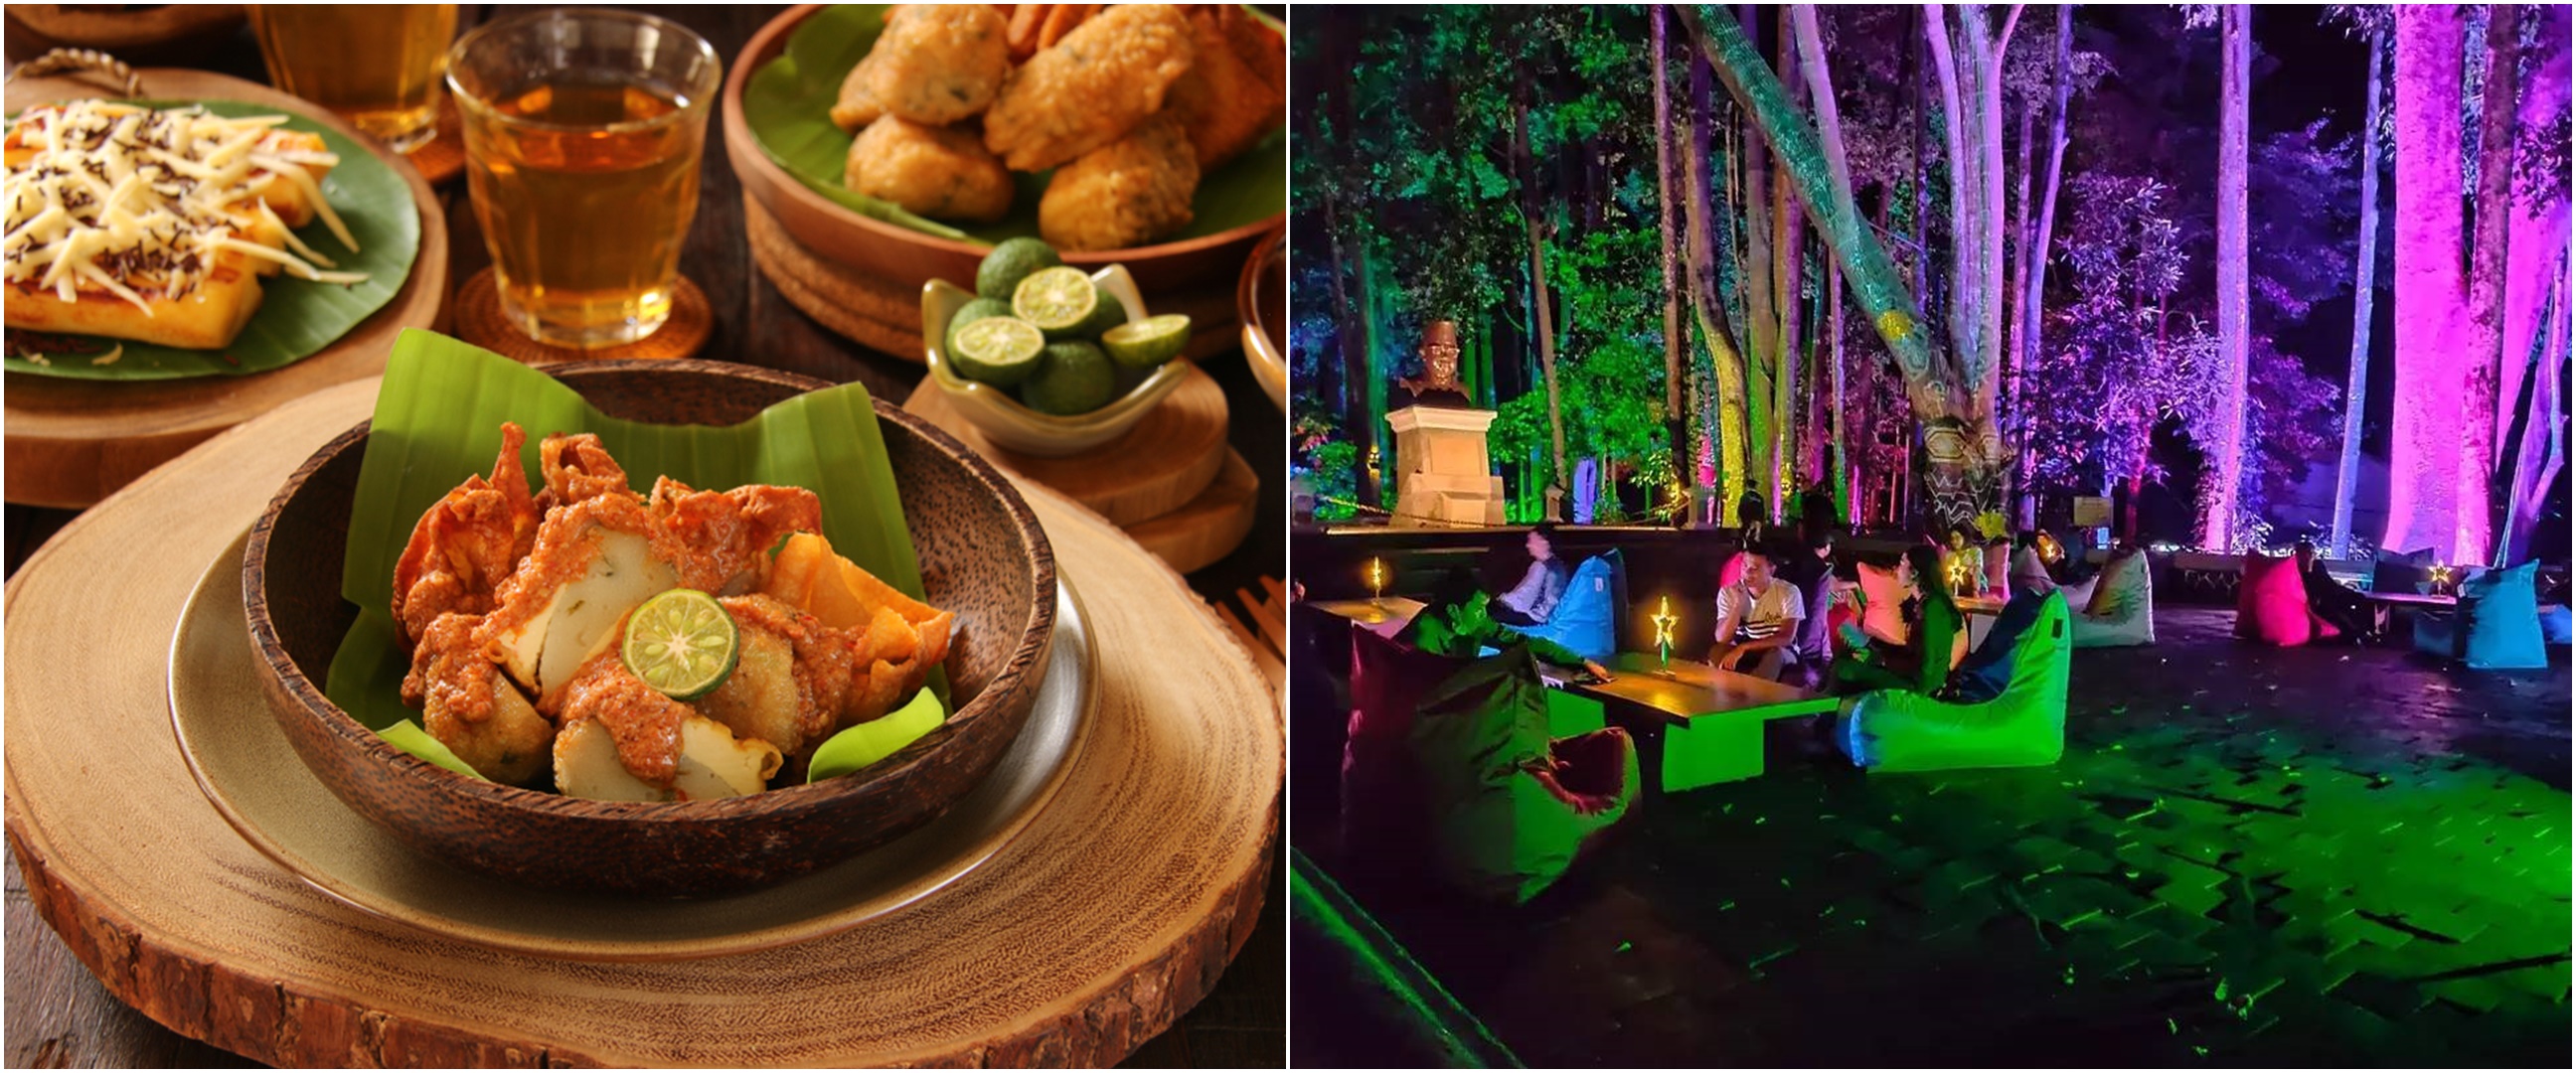 5 Spot wisata malam di Bandung, kulineran dan nikmati view city light